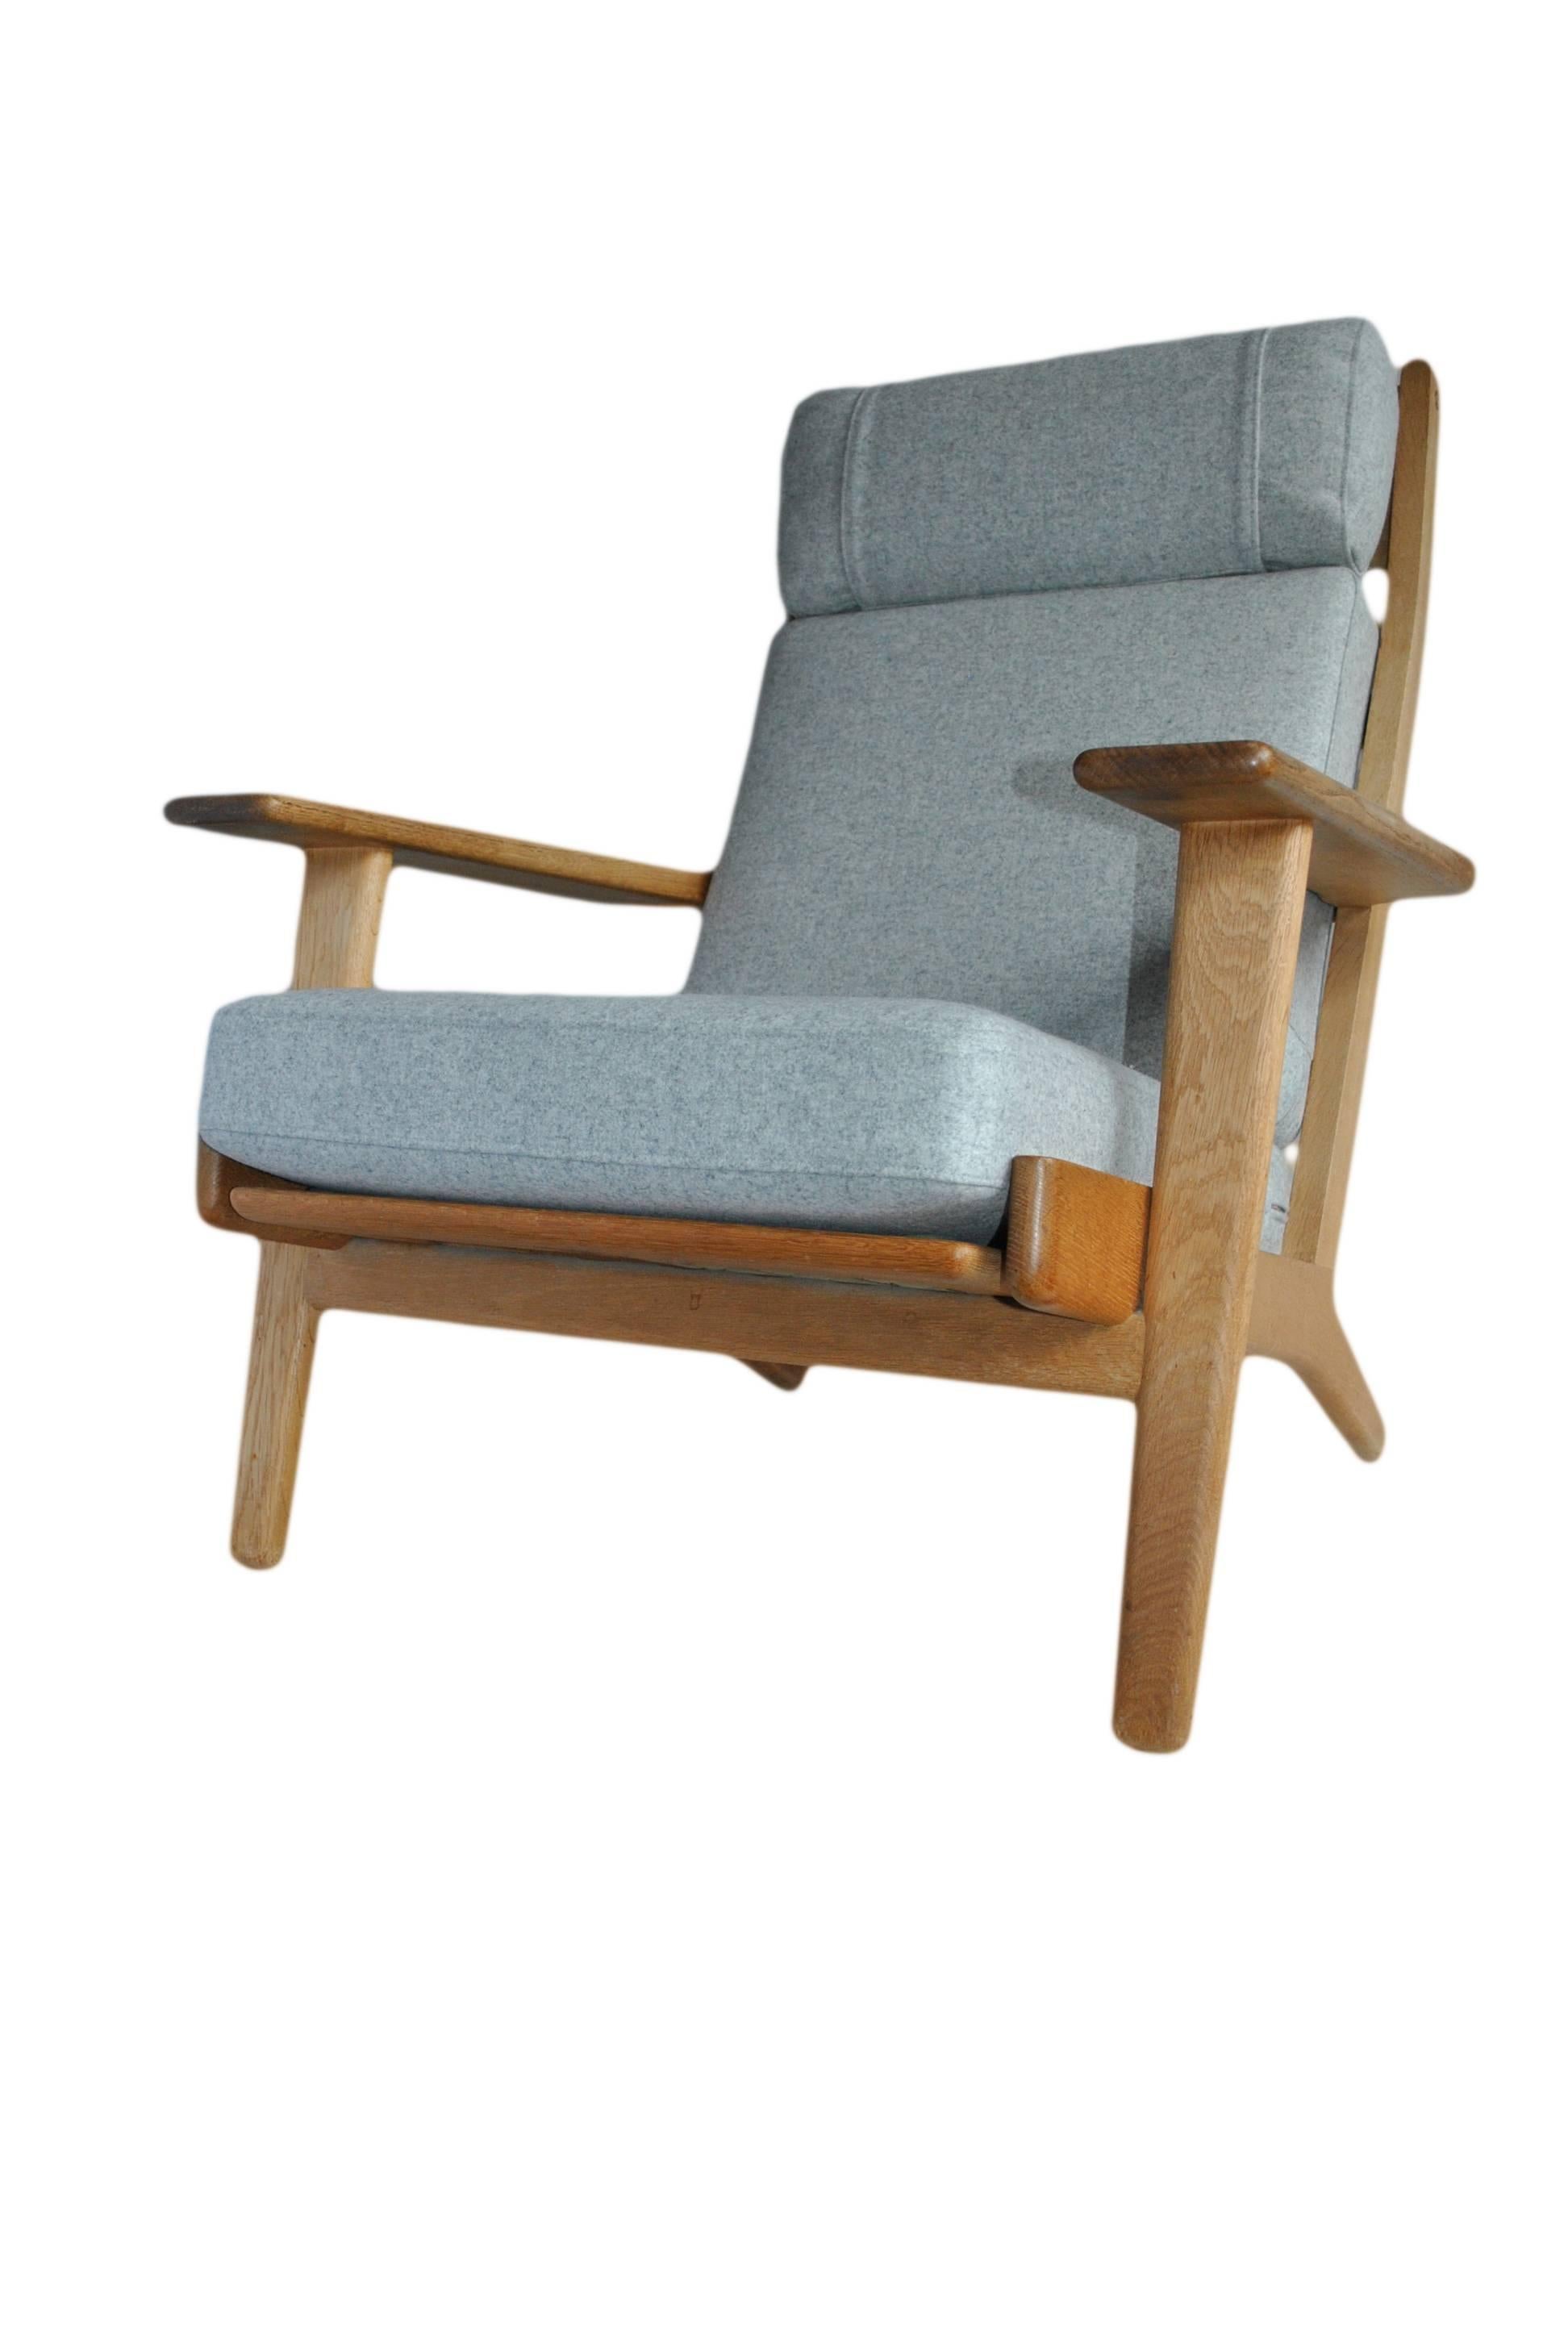 Hans Wegner GE290 Lounge Chair, 1950s Original. Fully refurbished. 3